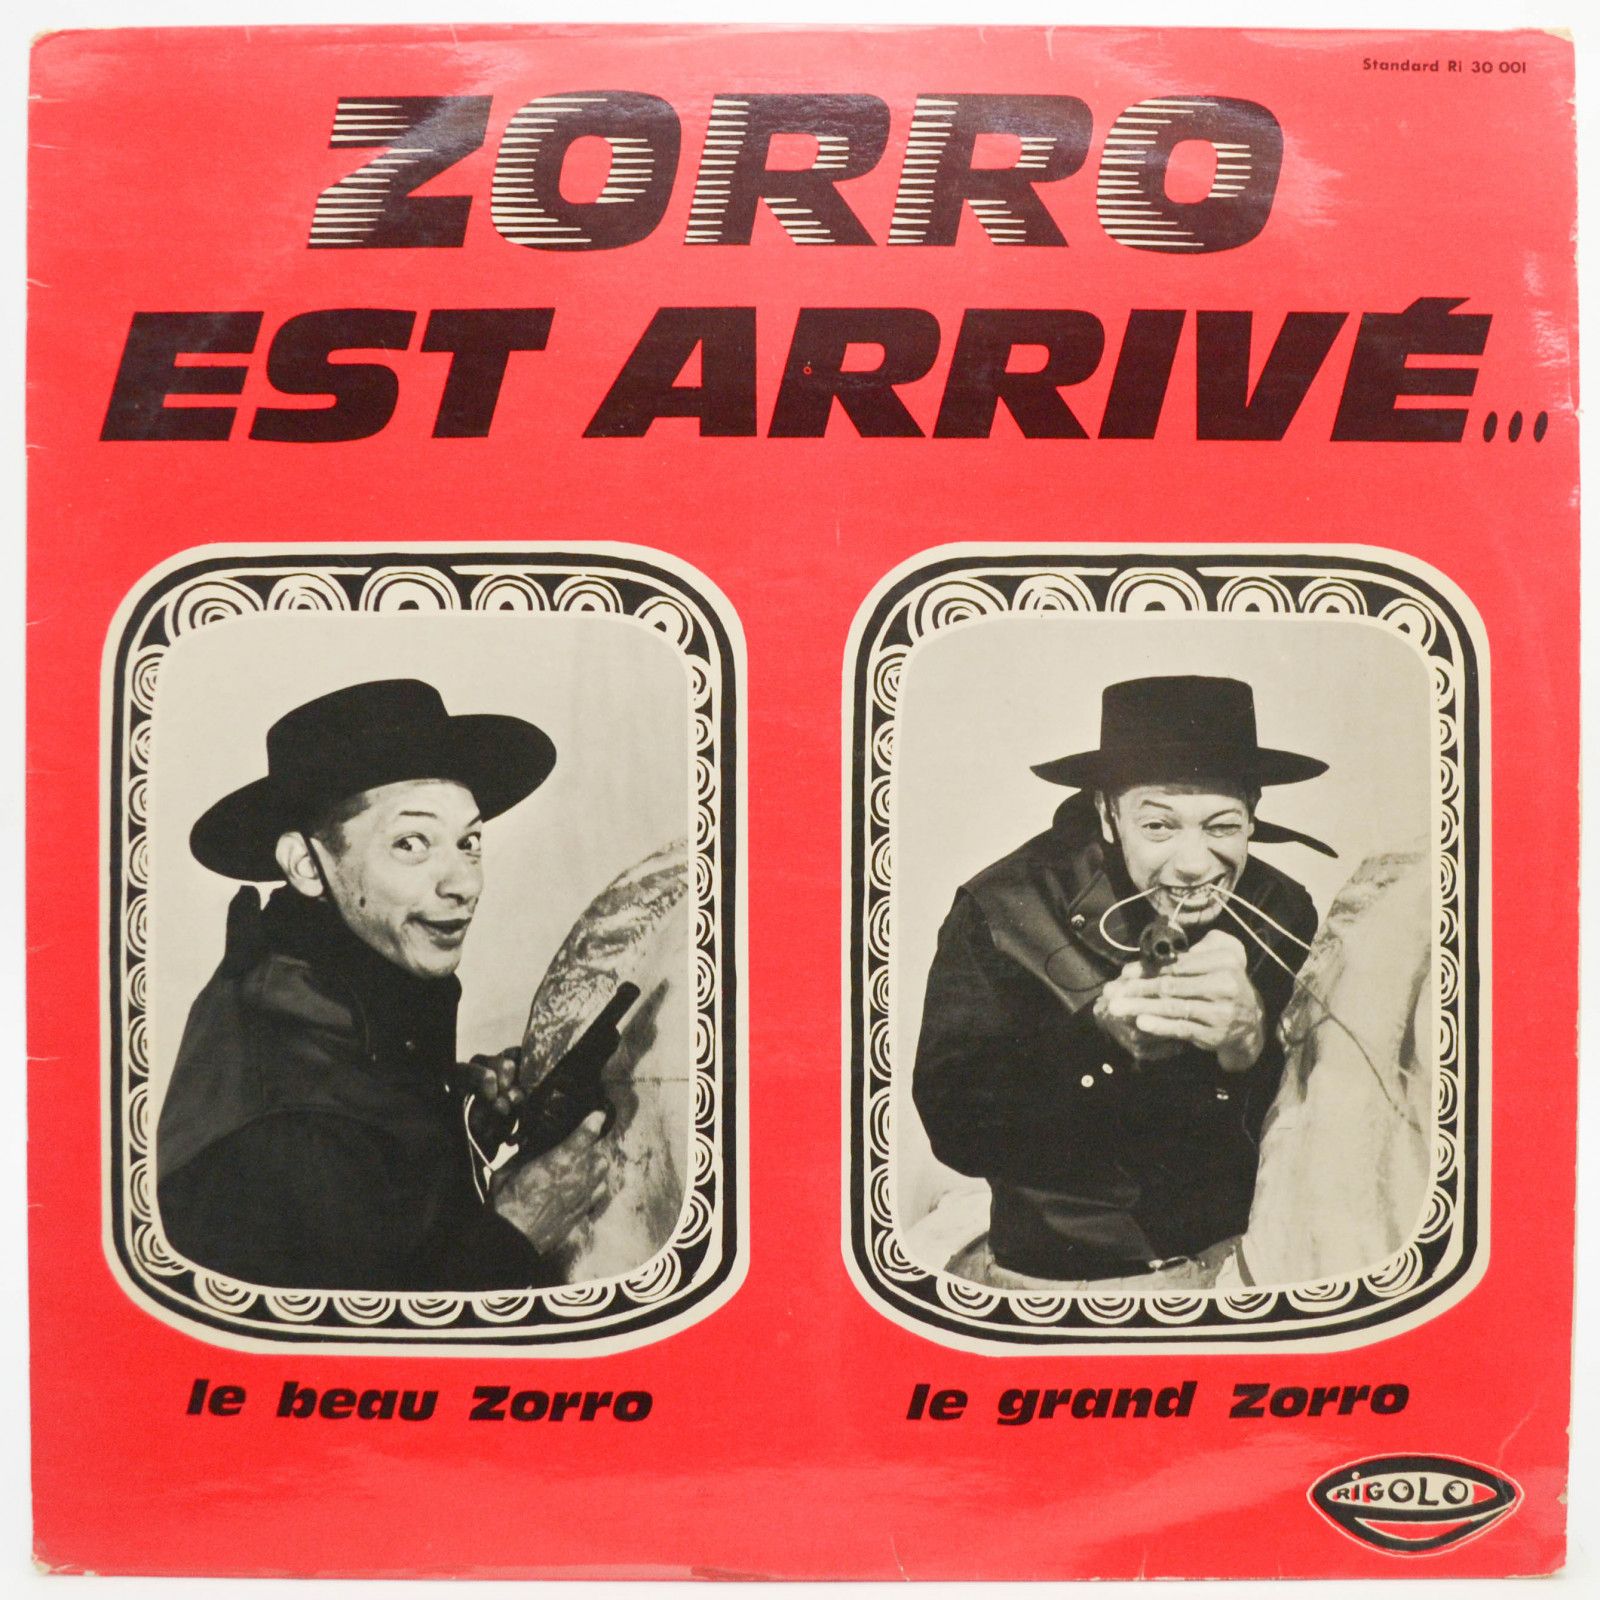 Henri Salvador — Zorro Est Arrivé.. (France), 1964